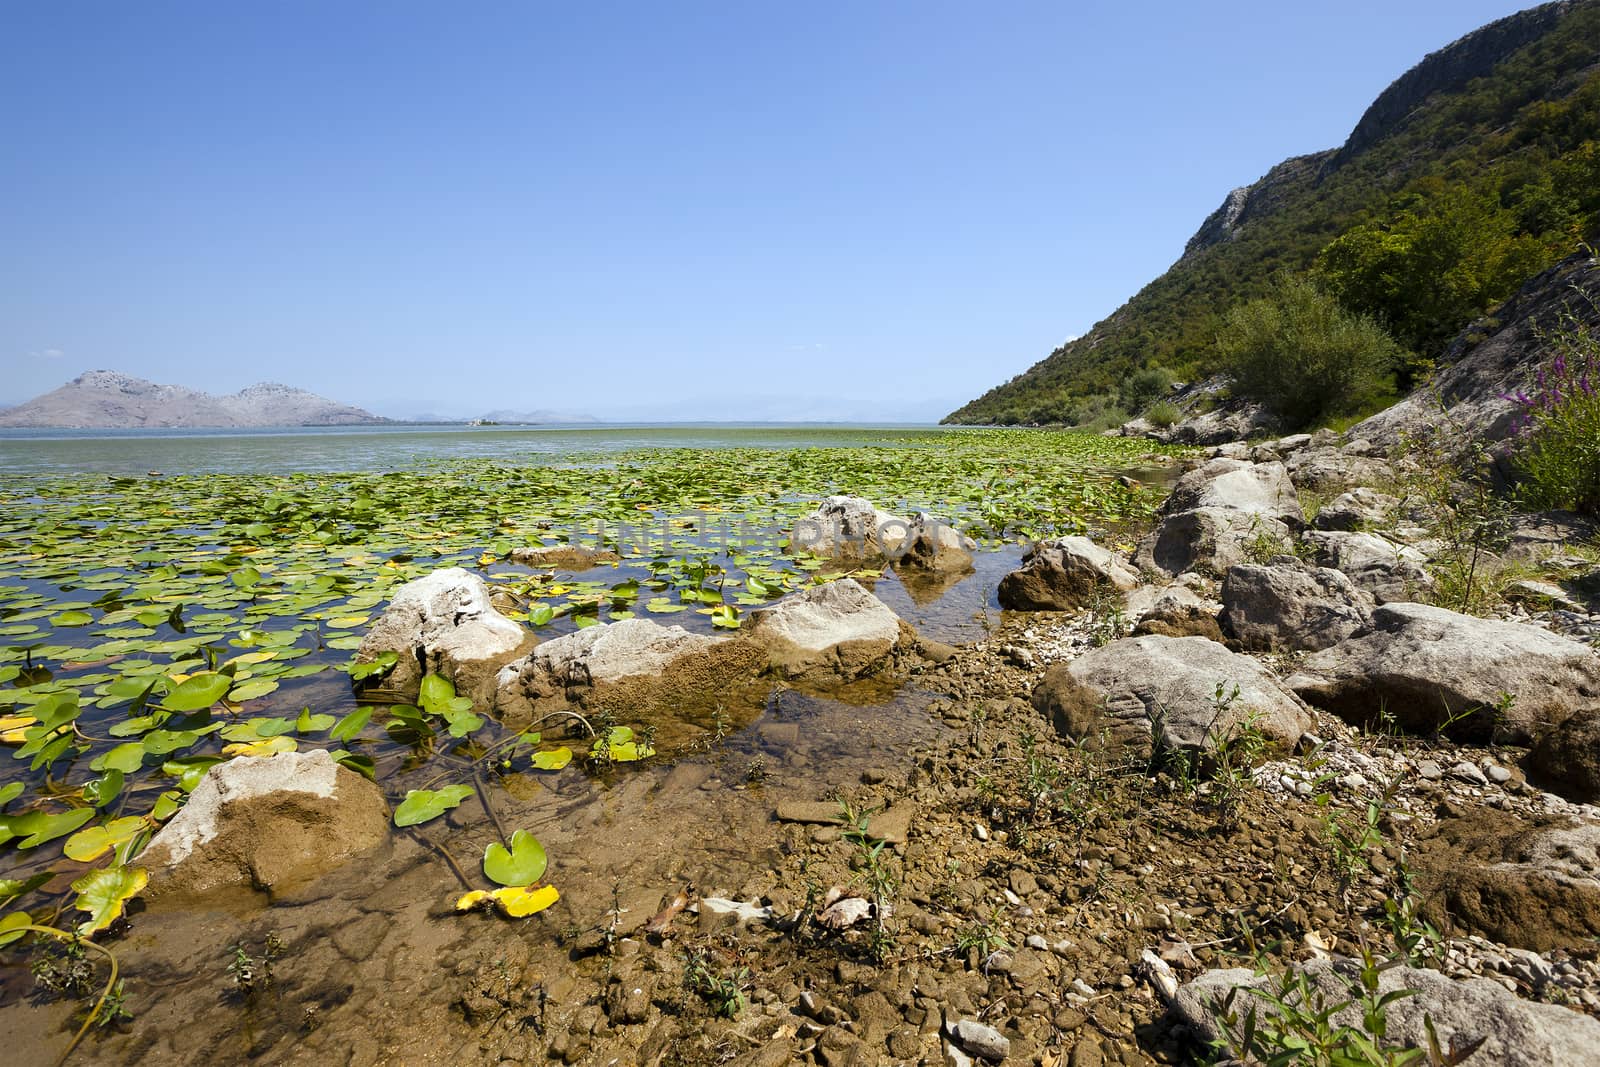   Lake Skadar located in Montenegro in summertime of year